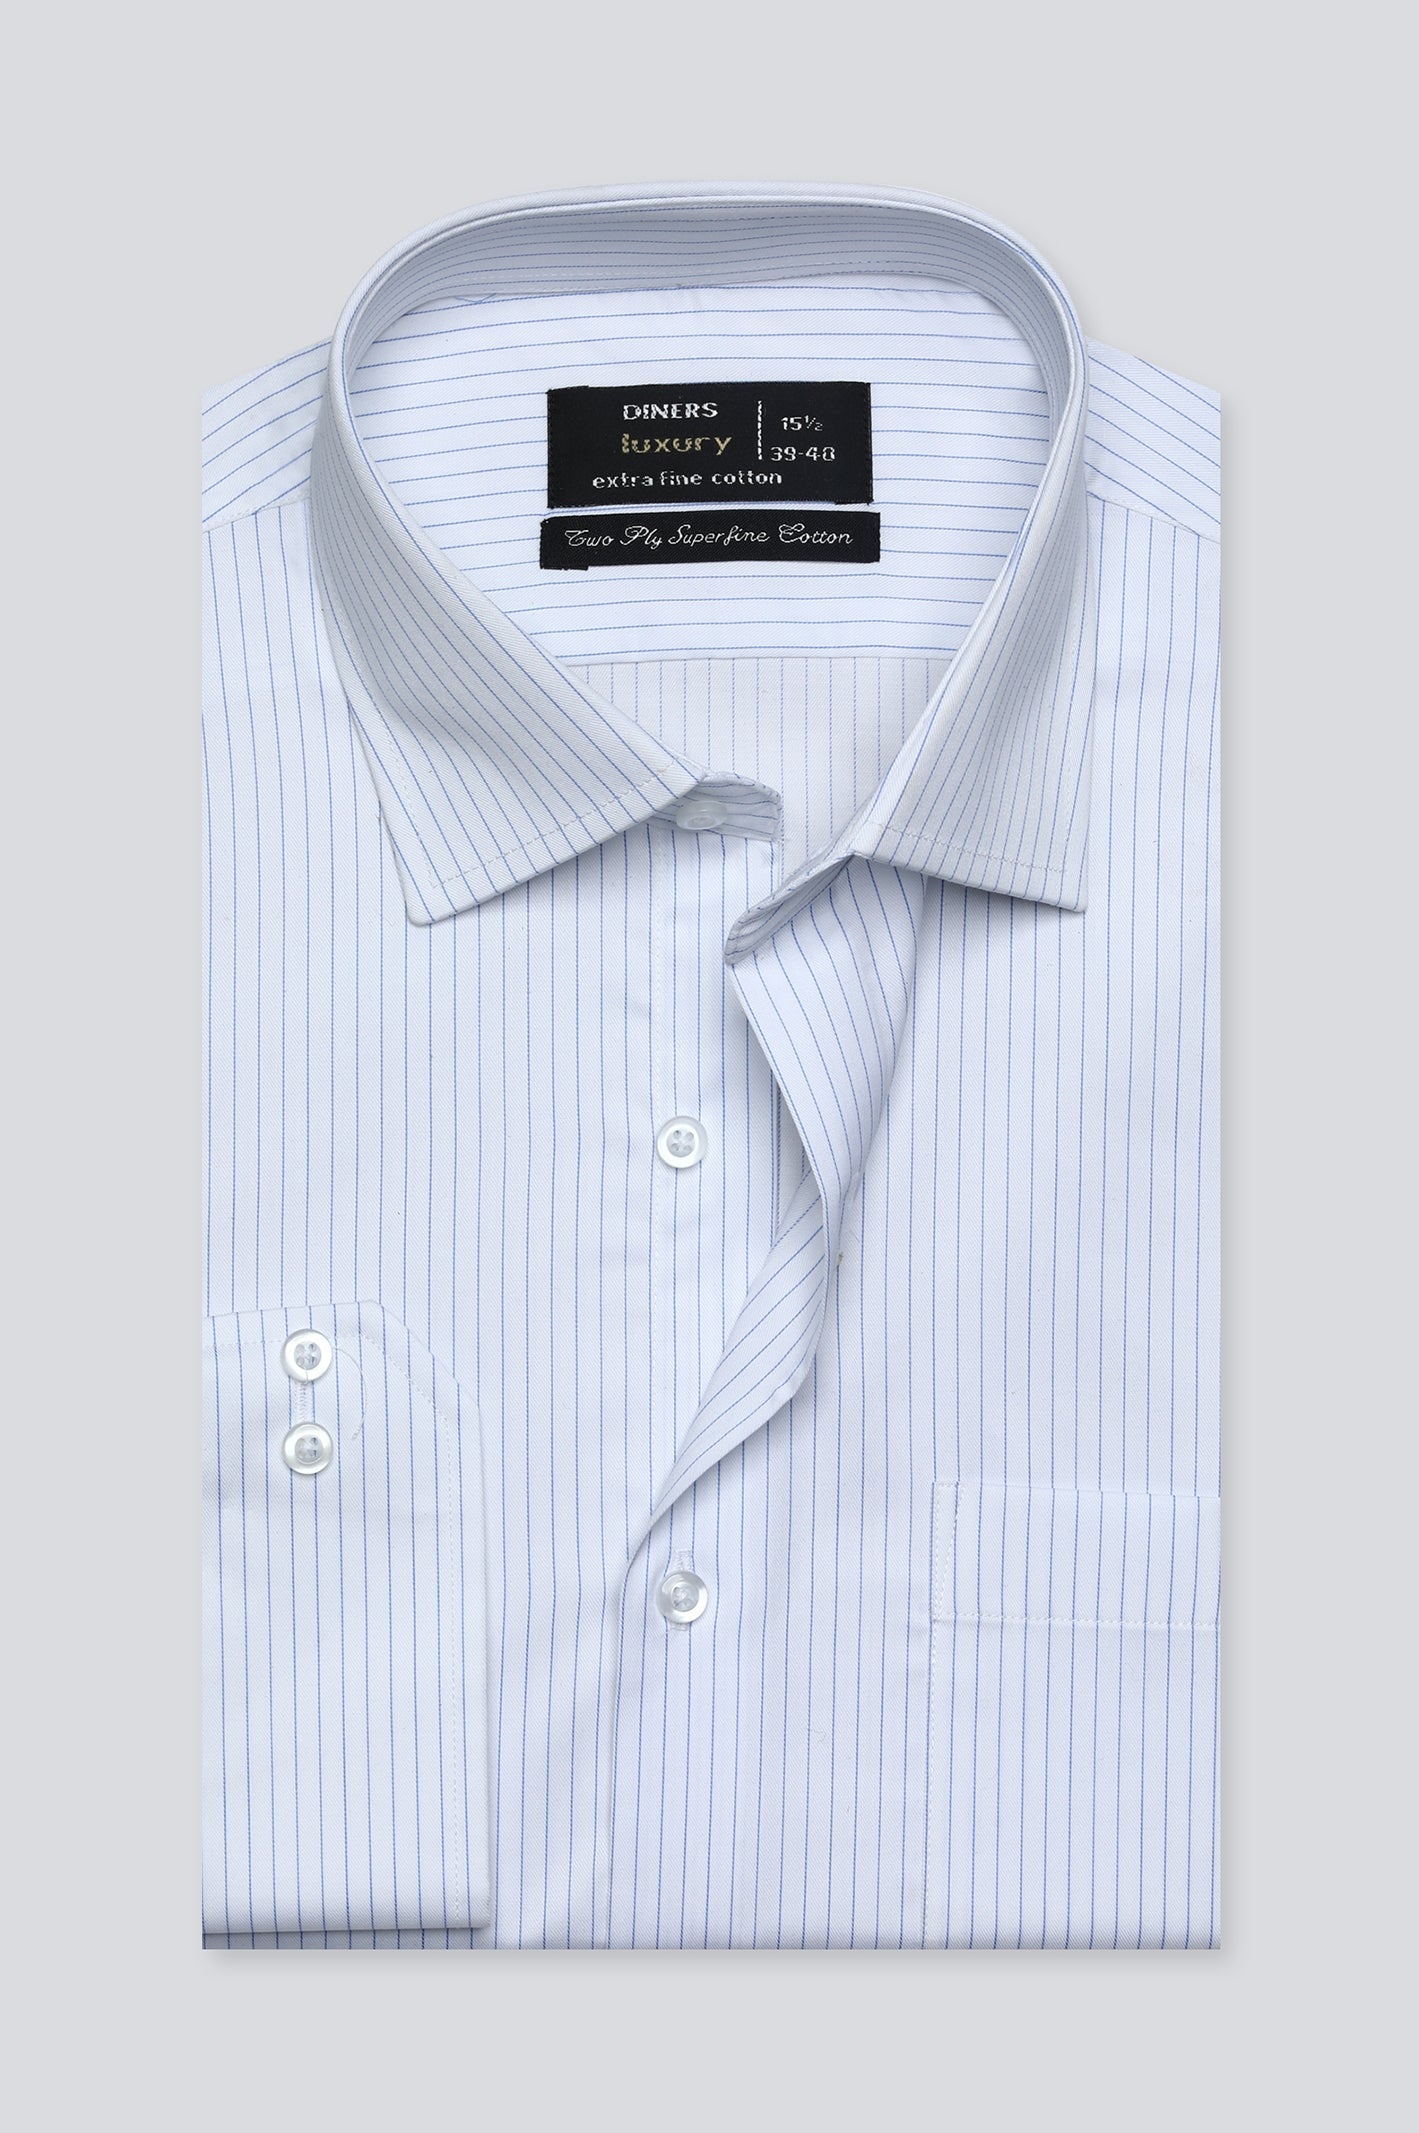 White Pinstripe Formal Shirt For Men - Diners